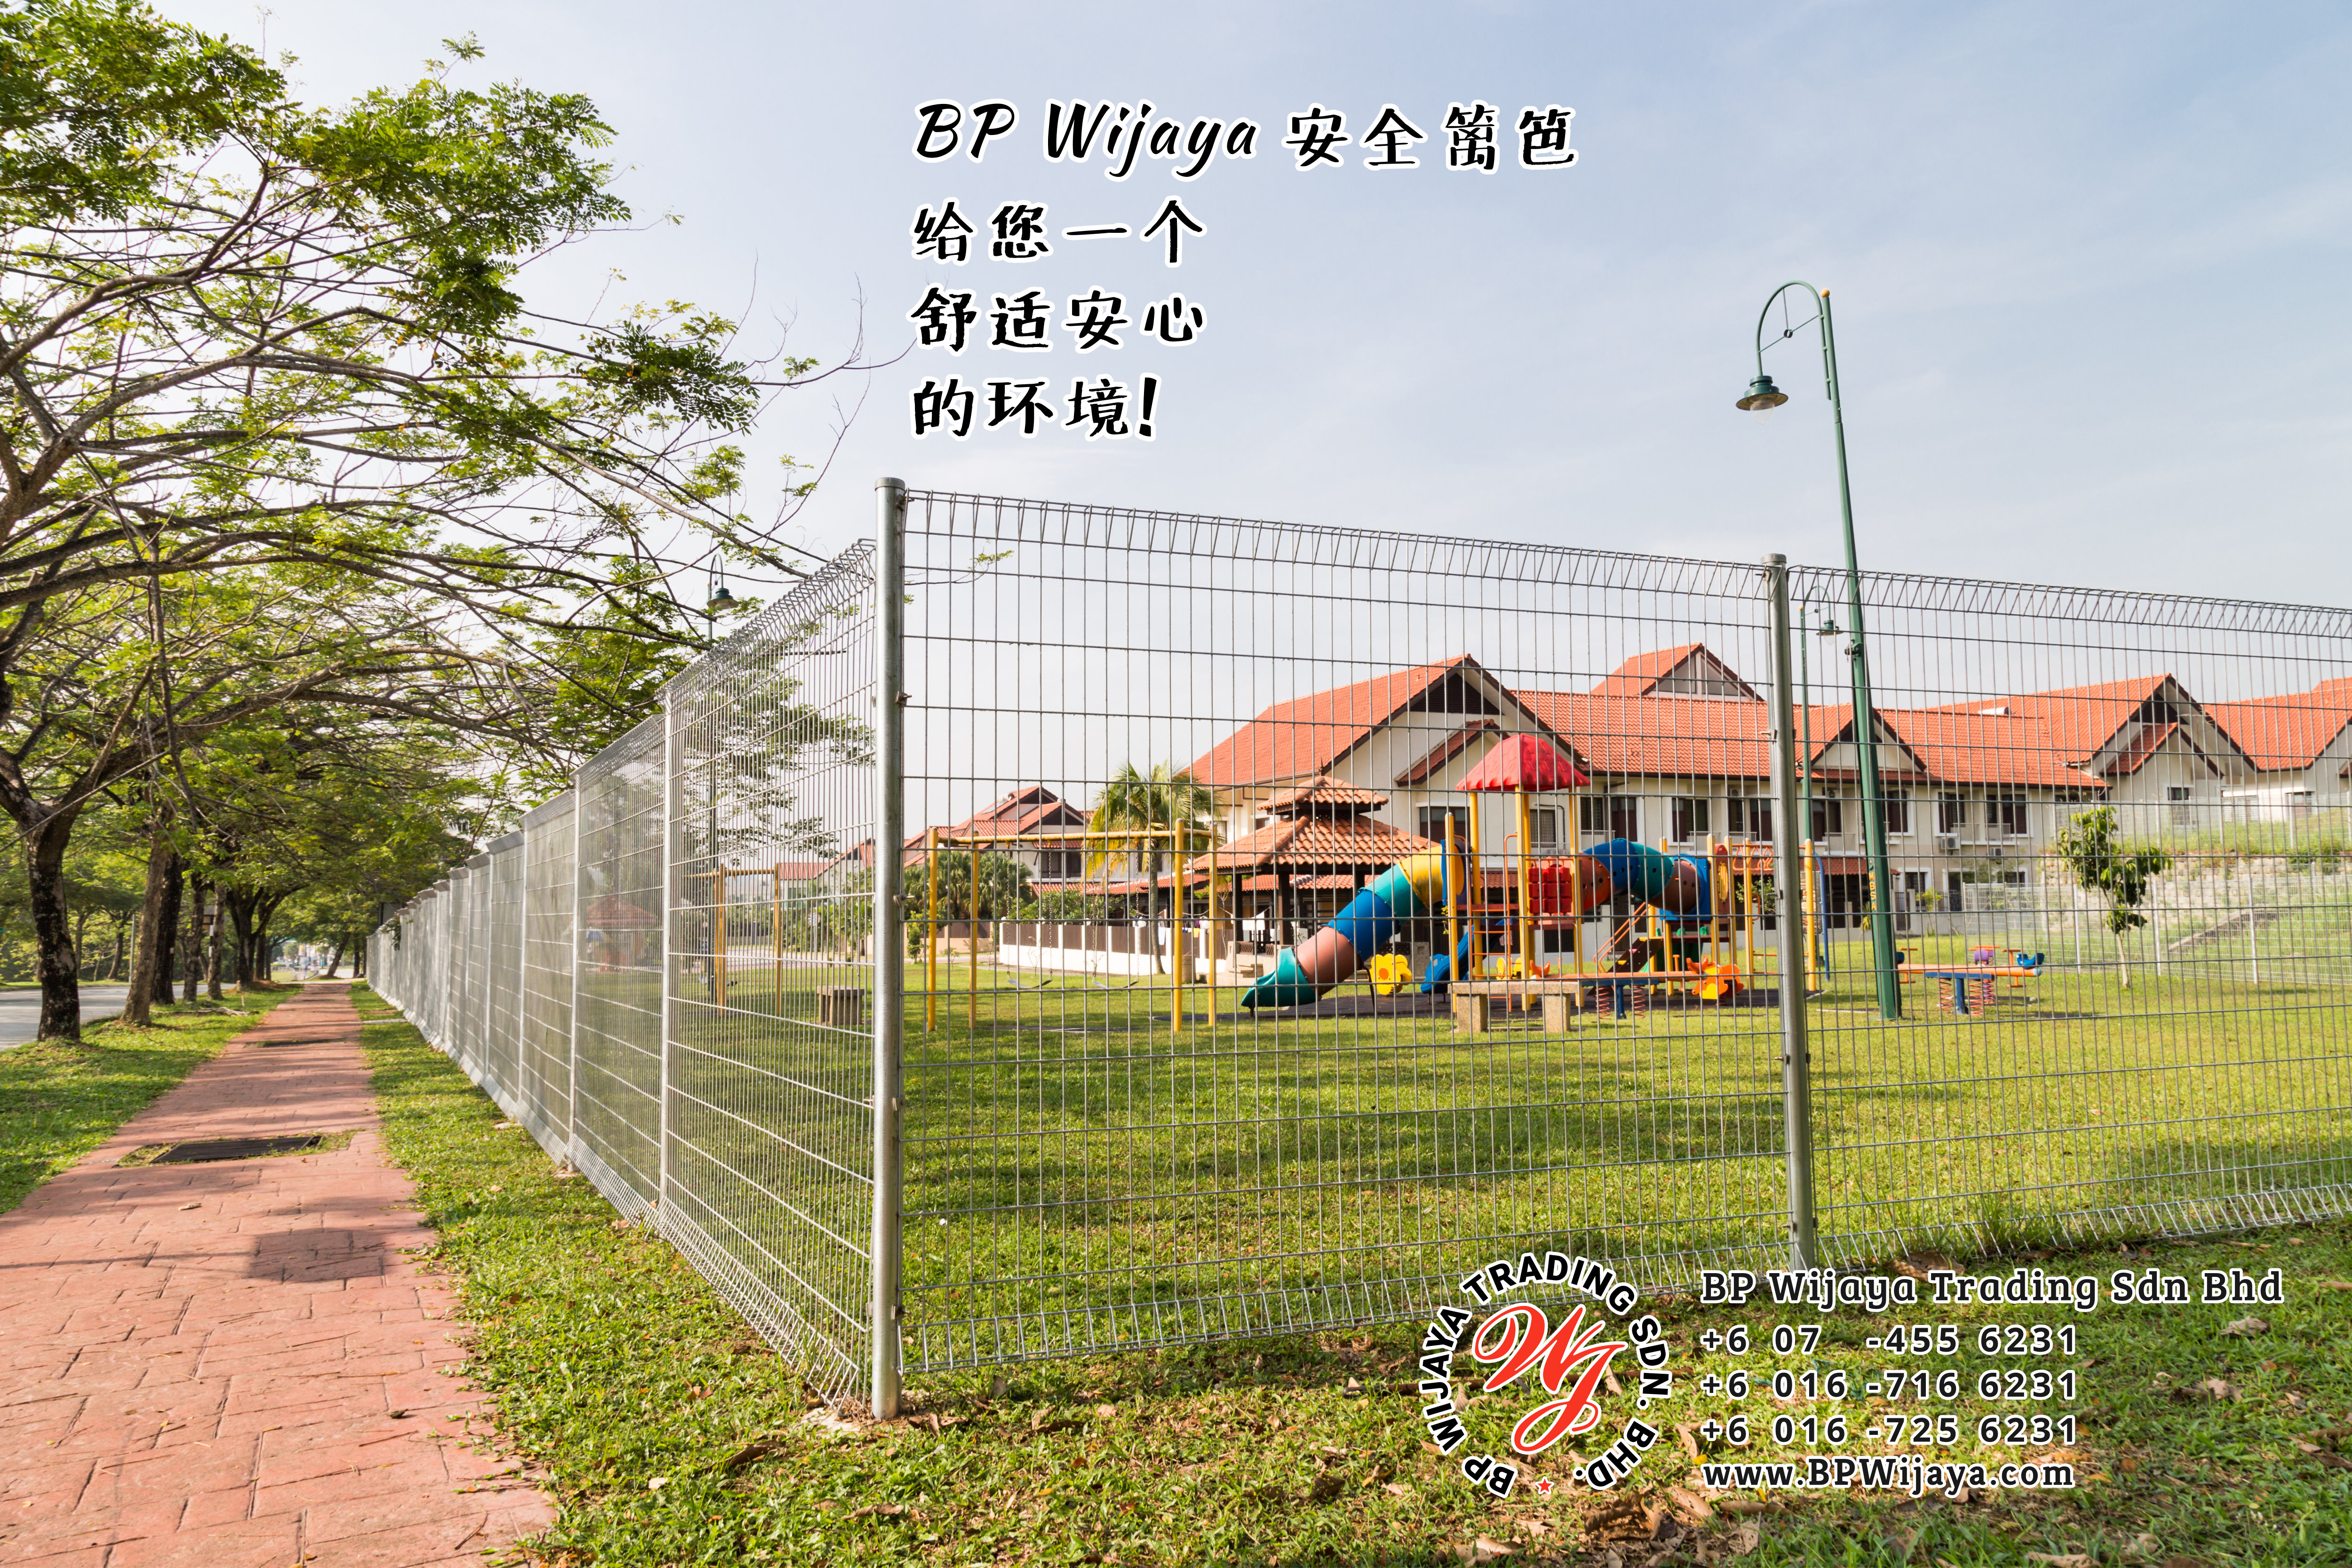 BP Wijaya Trading Sdn Bhd 马来西亚 雪兰莪 吉隆坡 安全 篱笆 制造商 提供 篱笆 建筑材料 给 发展商 花园 公寓 住家 工厂 果园 社会 安全藩篱 建设 A03-13